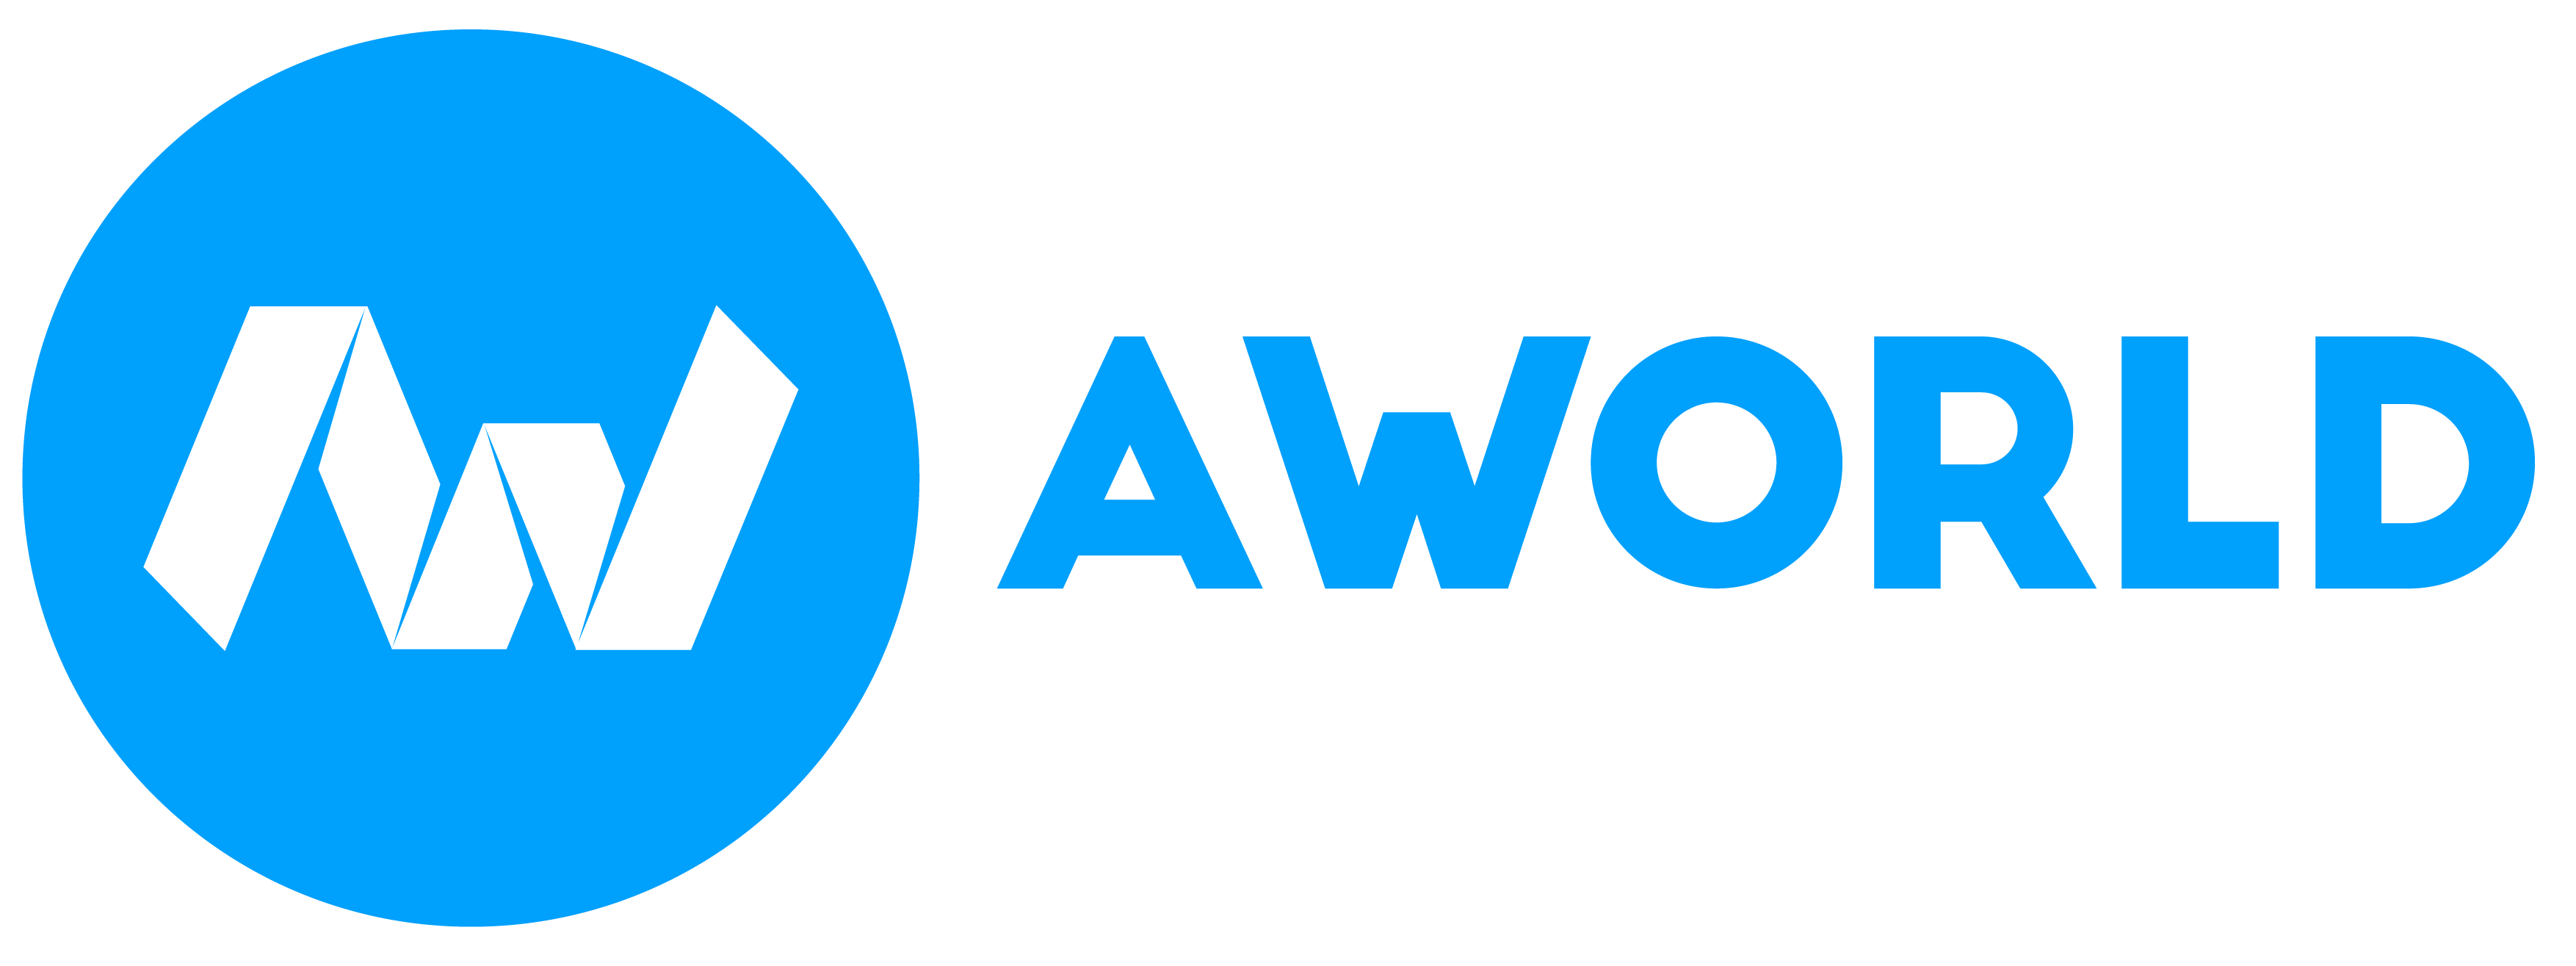 AWorld